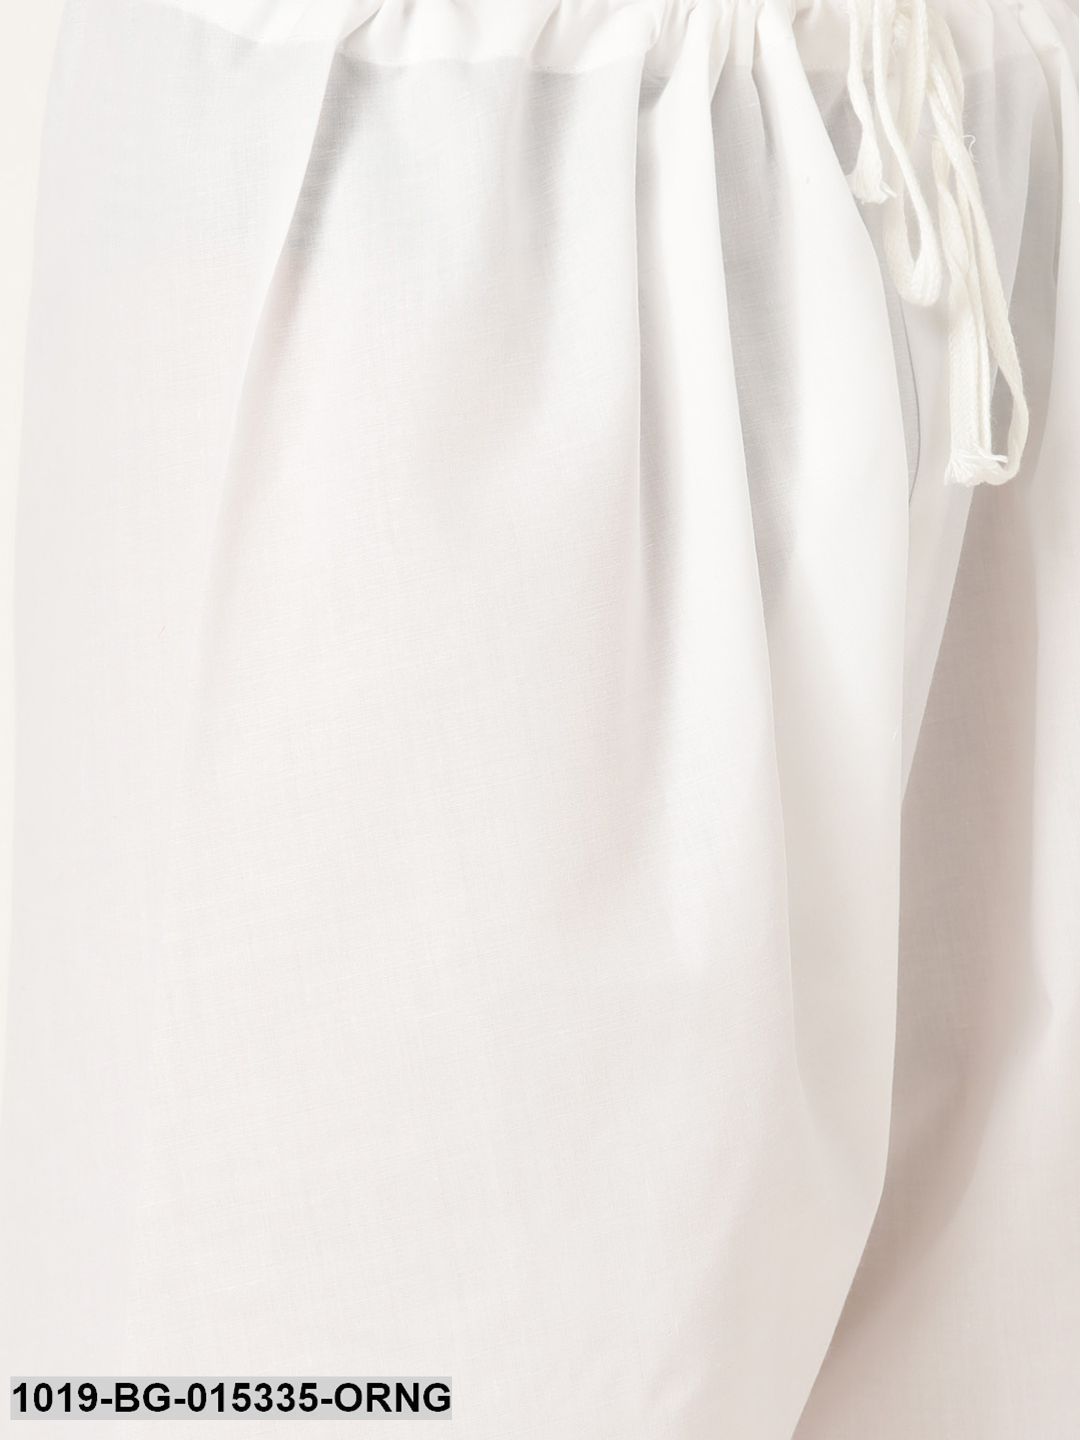 Men's Cotton Orange Solid Kurta & White Churidar Pyjama Set - Sojanya